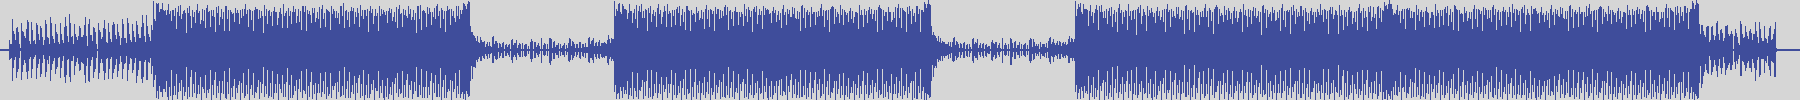 nf_boyz_records [NFY050] The Cowboy Activity - Alkaline Face [Face Boy Mix] audio wave form